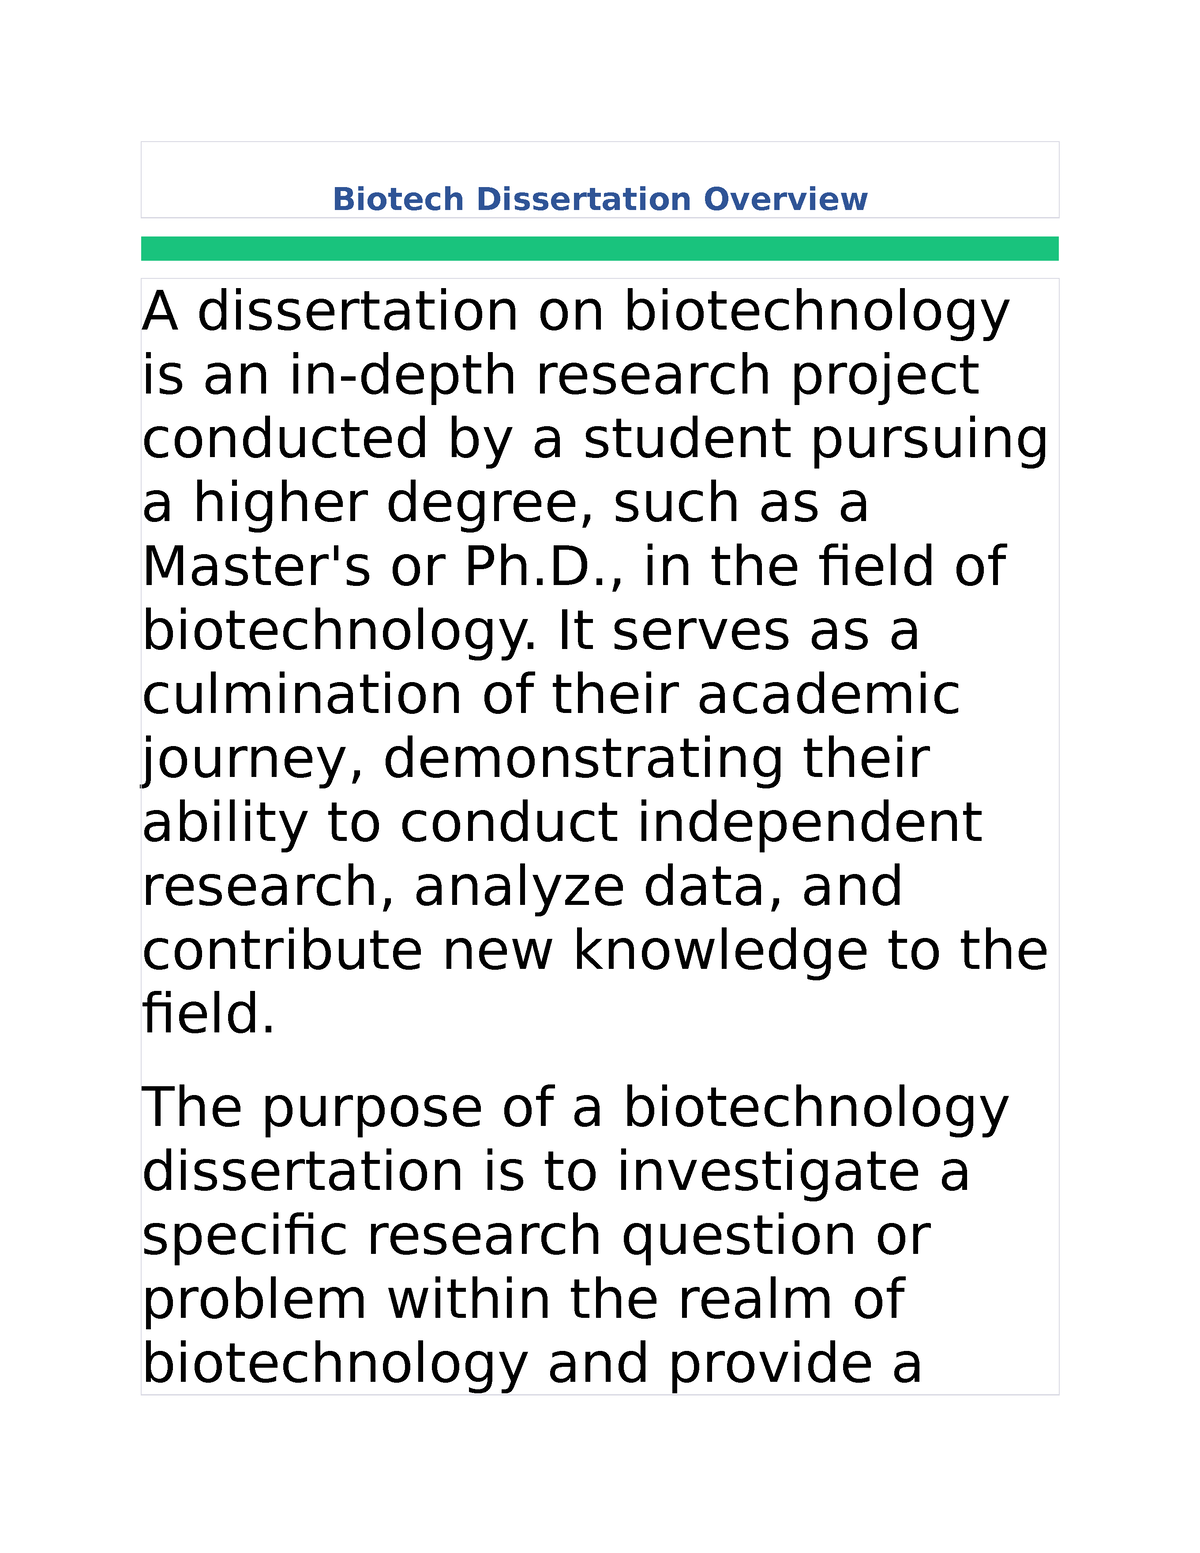 dissertation project biotechnology